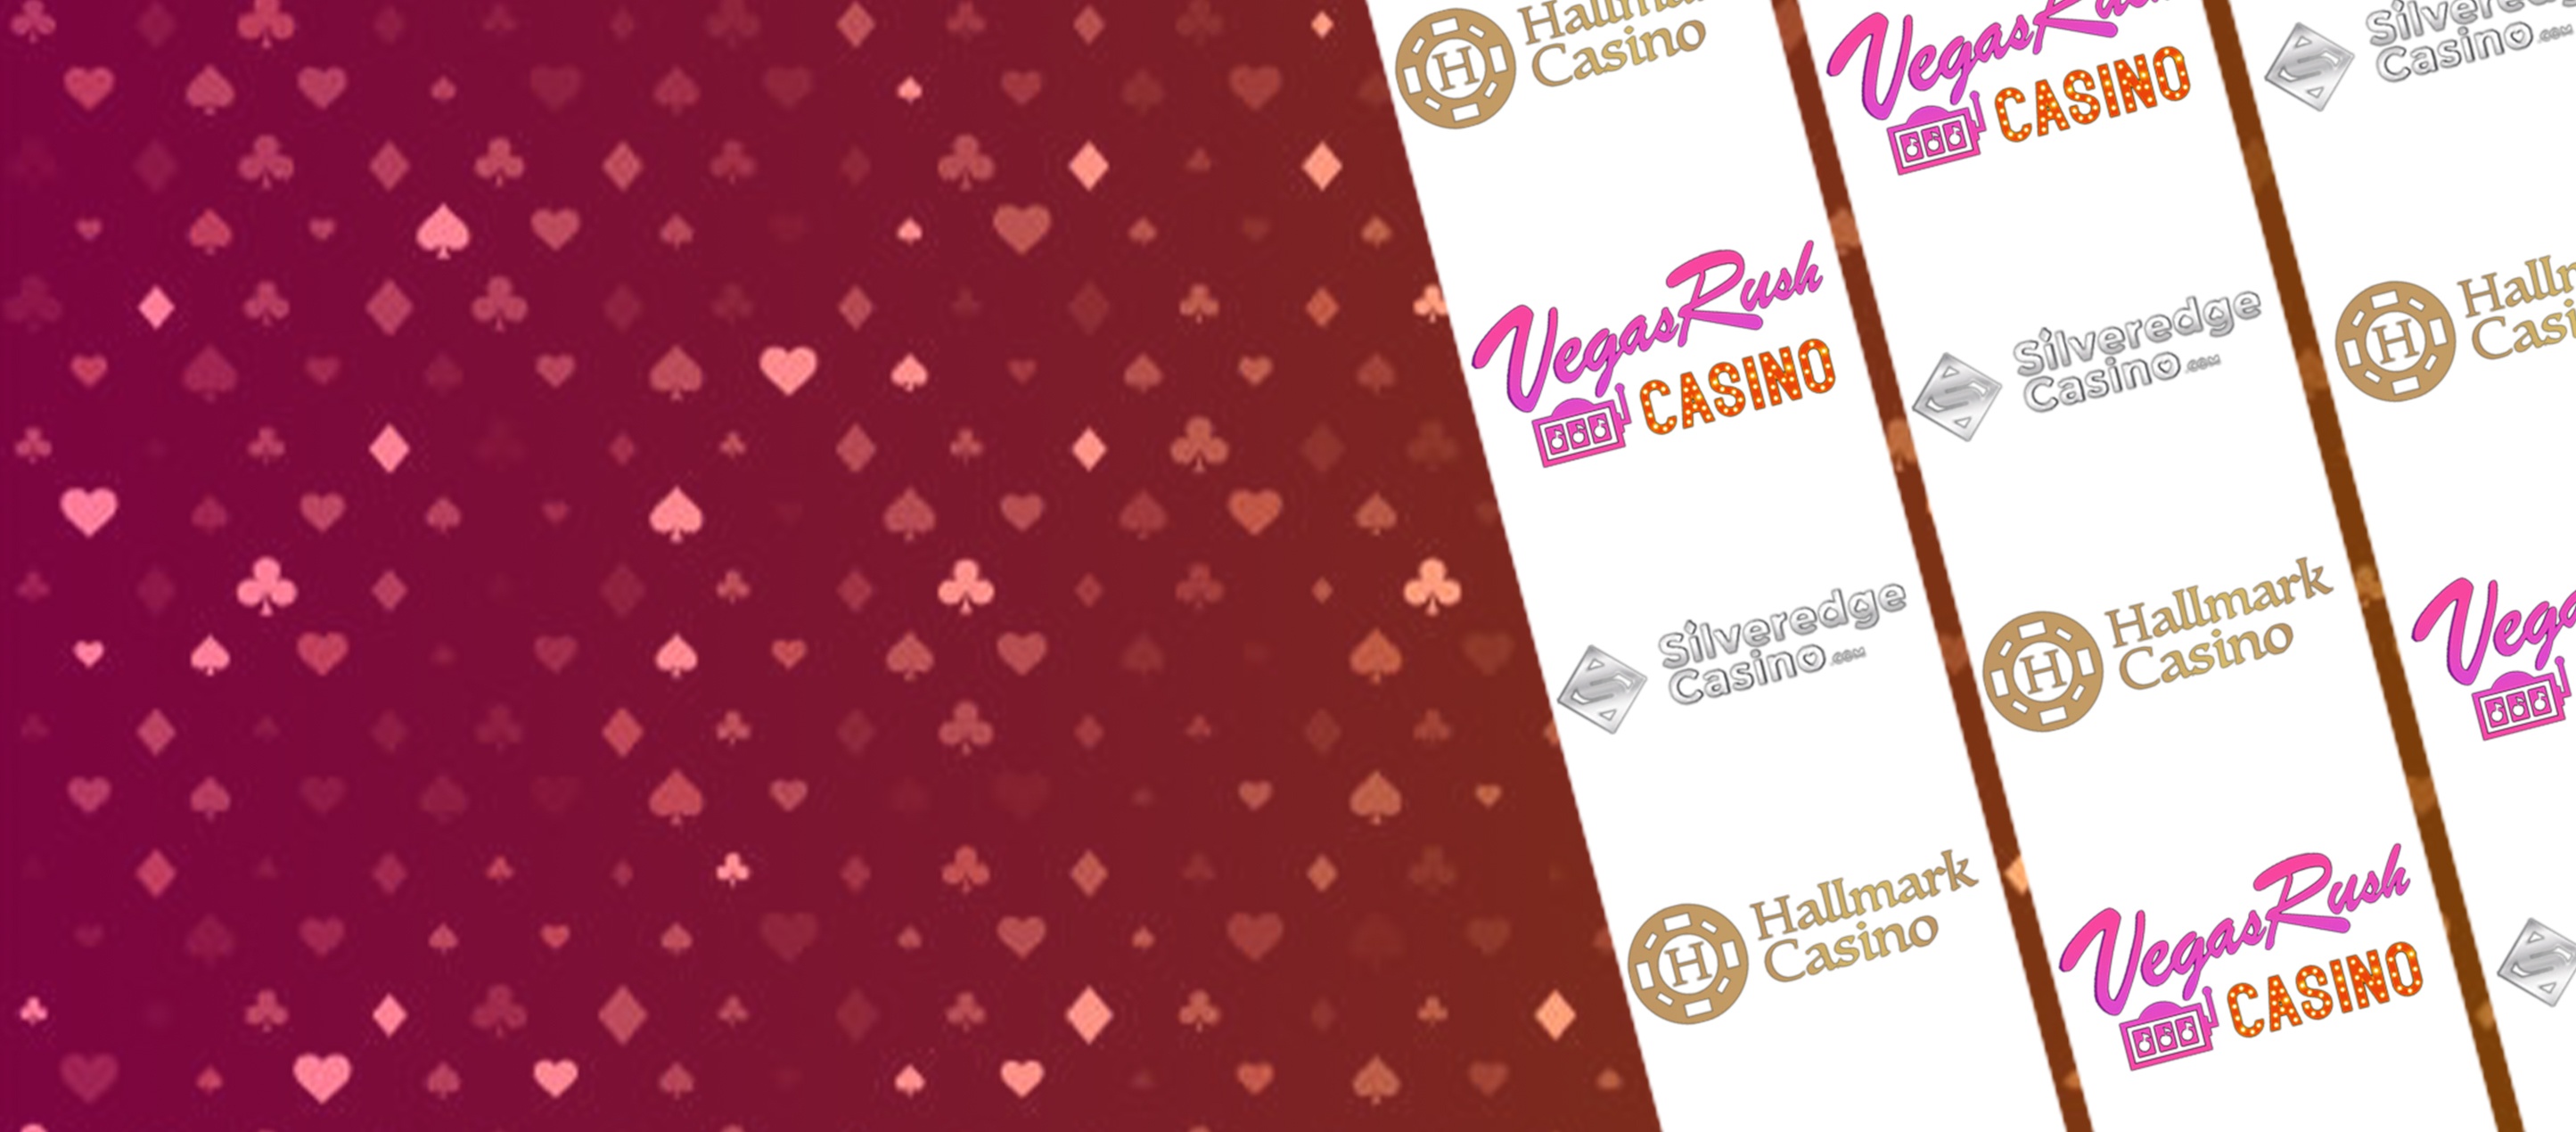 active no deposit bonus codes hallmark casino